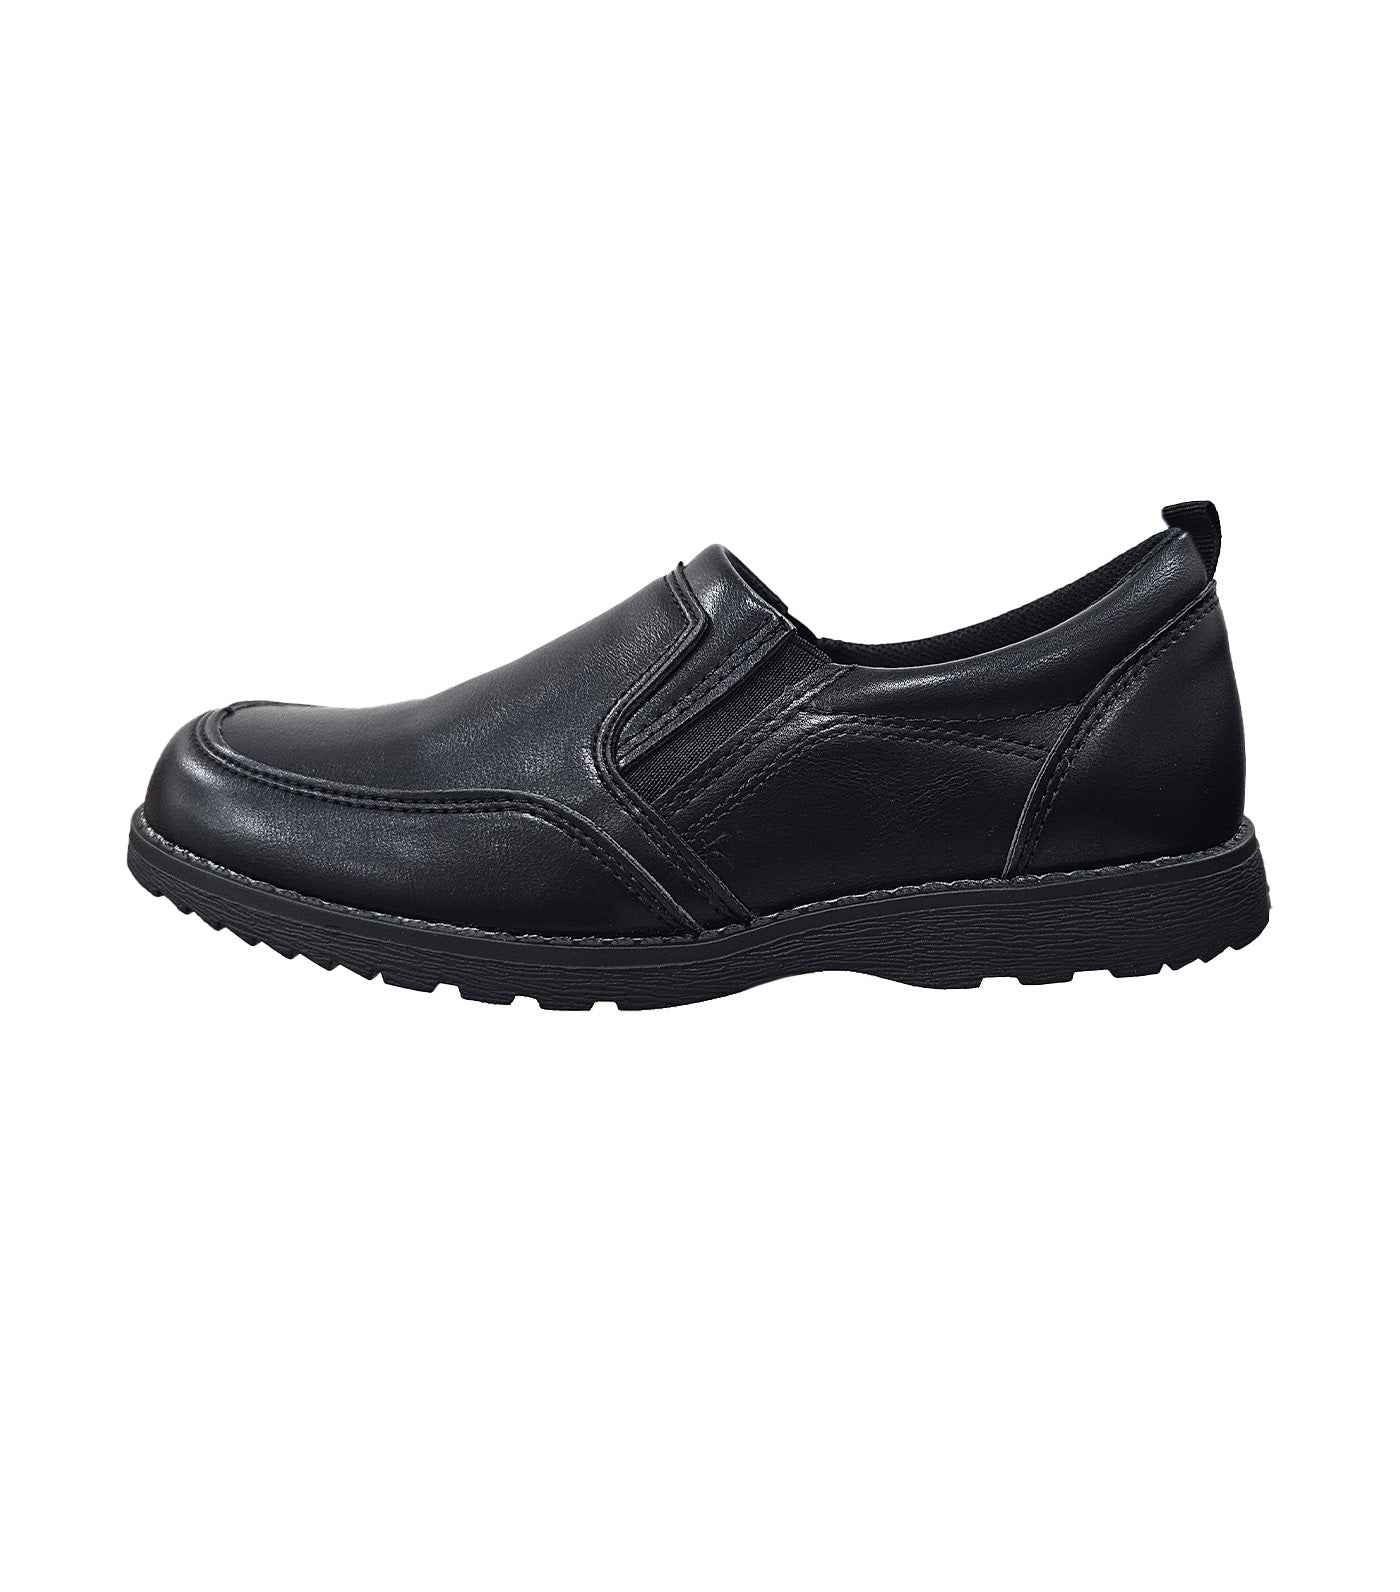 Adler Casual Shoes Black